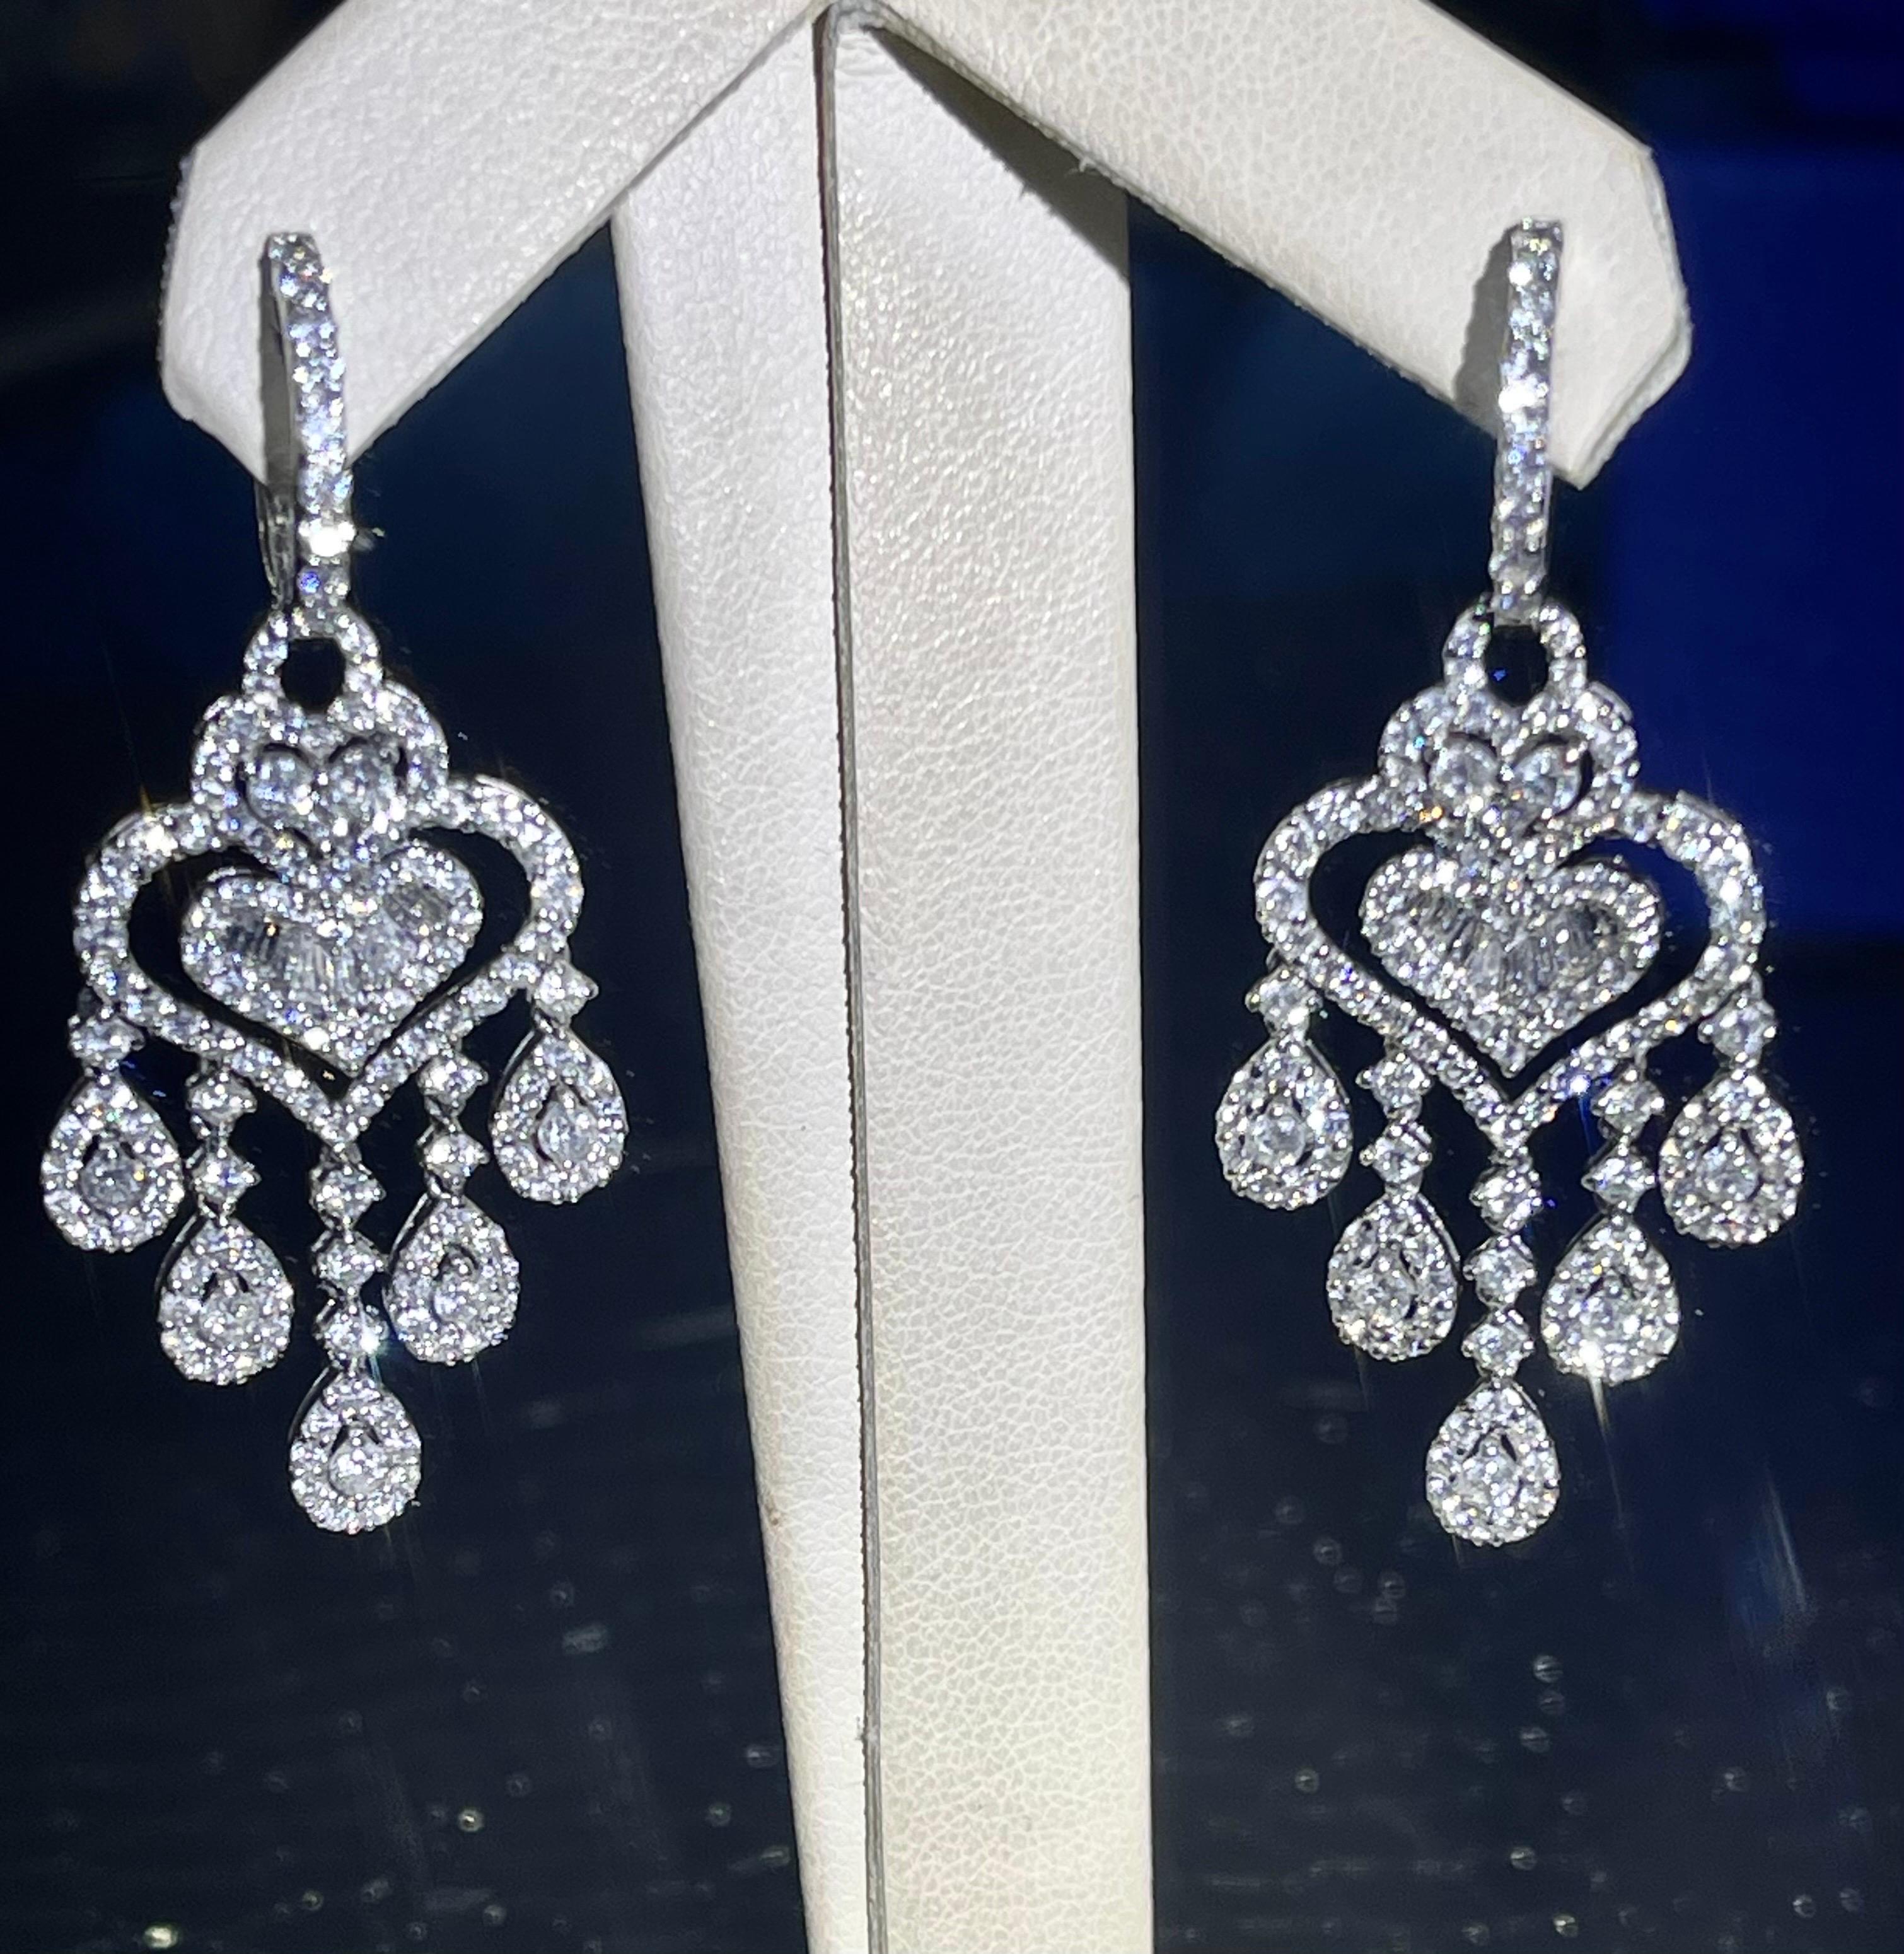 Classical Roman Fabulous Chandelier Diamond Earrings In 18k White Gold  For Sale